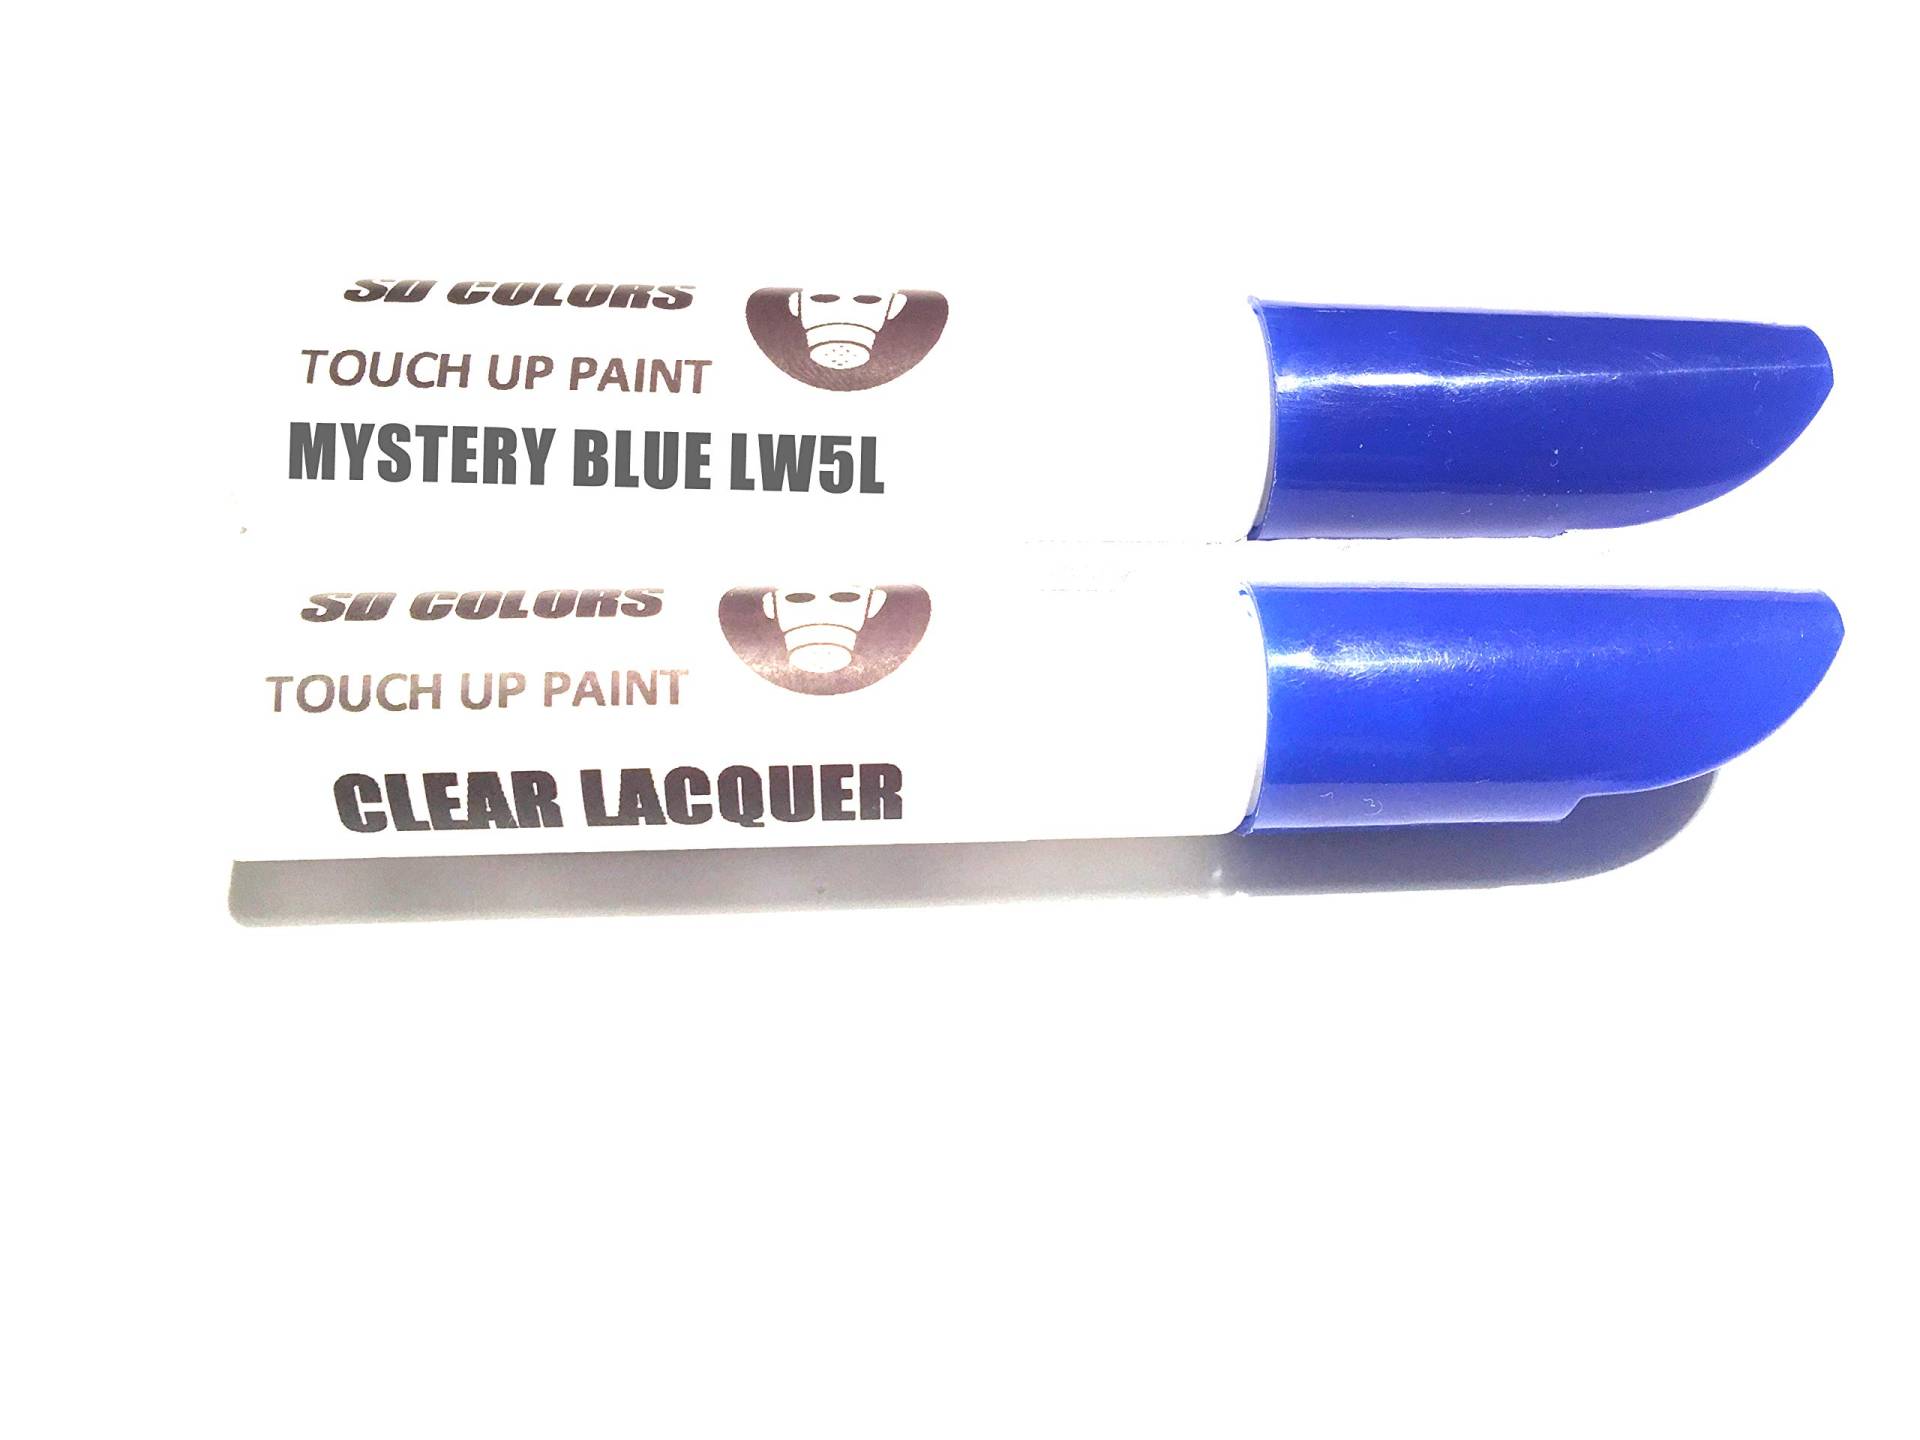 SD COLORS Mystery Blue LW5L Lackstift-Reparatur-Set, 12 ml, Pinsel mit Kratzabsplitterung, Farbcode LW5L Mysteryblau (Lack + Lack) von SD COLORS